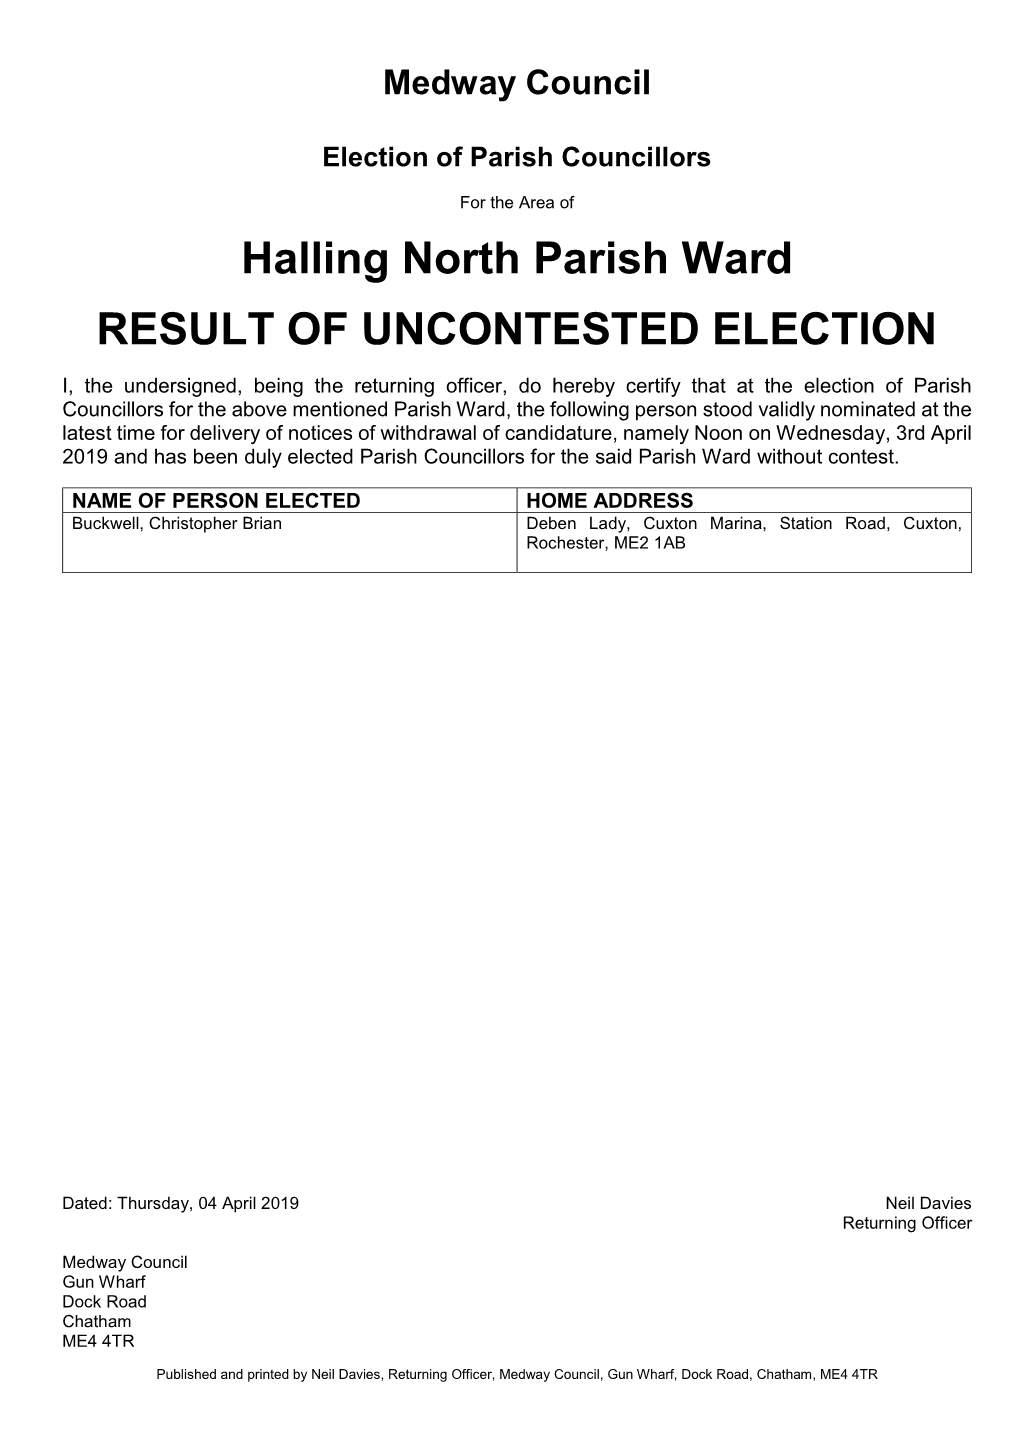 Halling North Parish Ward RESULT of UNCONTESTED ELECTION